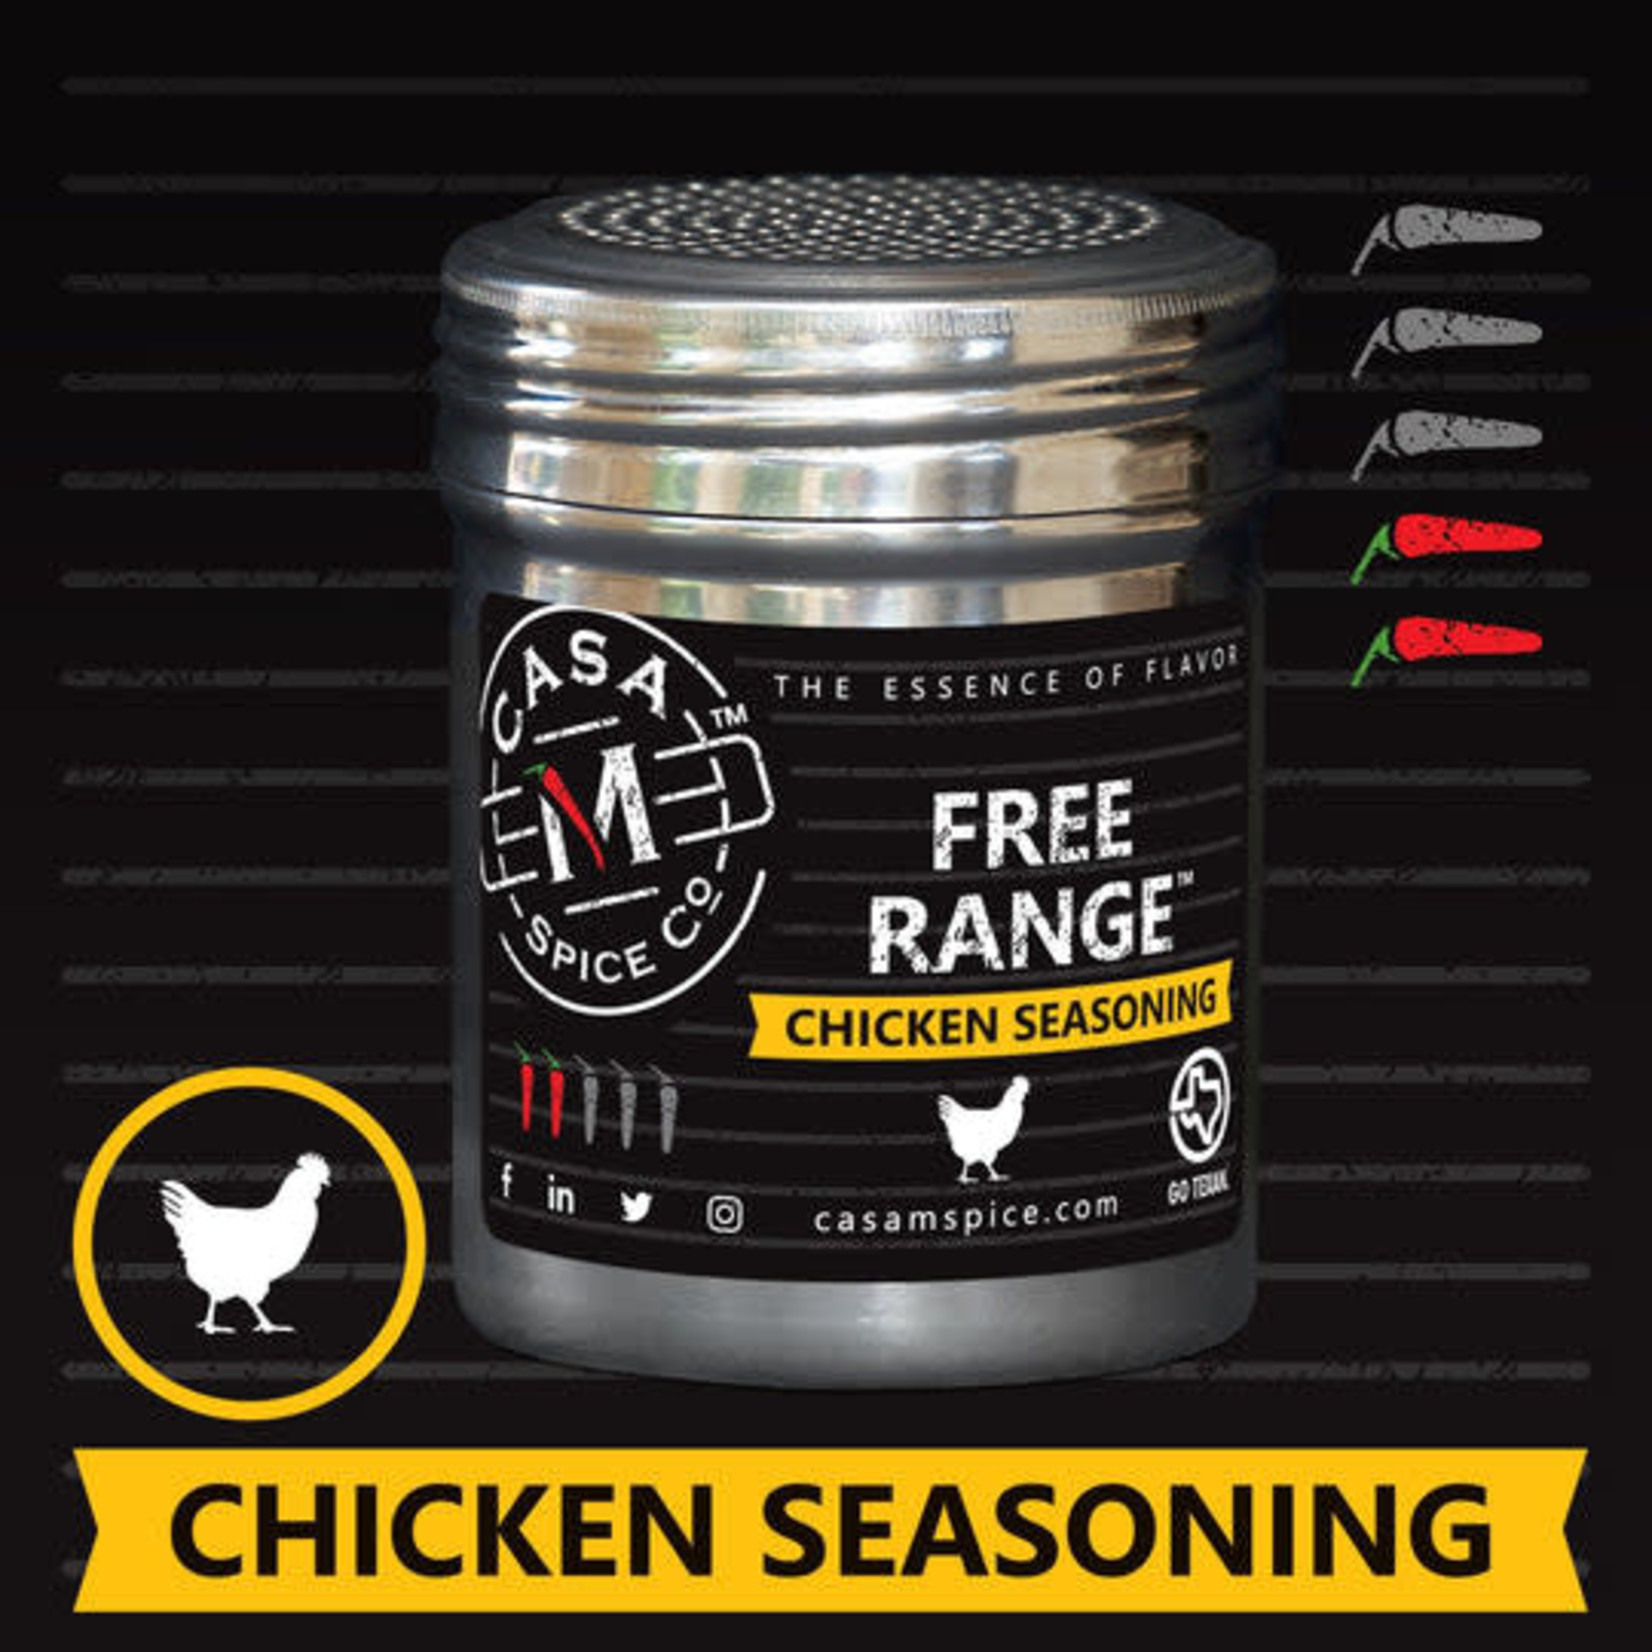 Casa M Spice Co Free Range Chicken Seasoning--stainless steel shaker